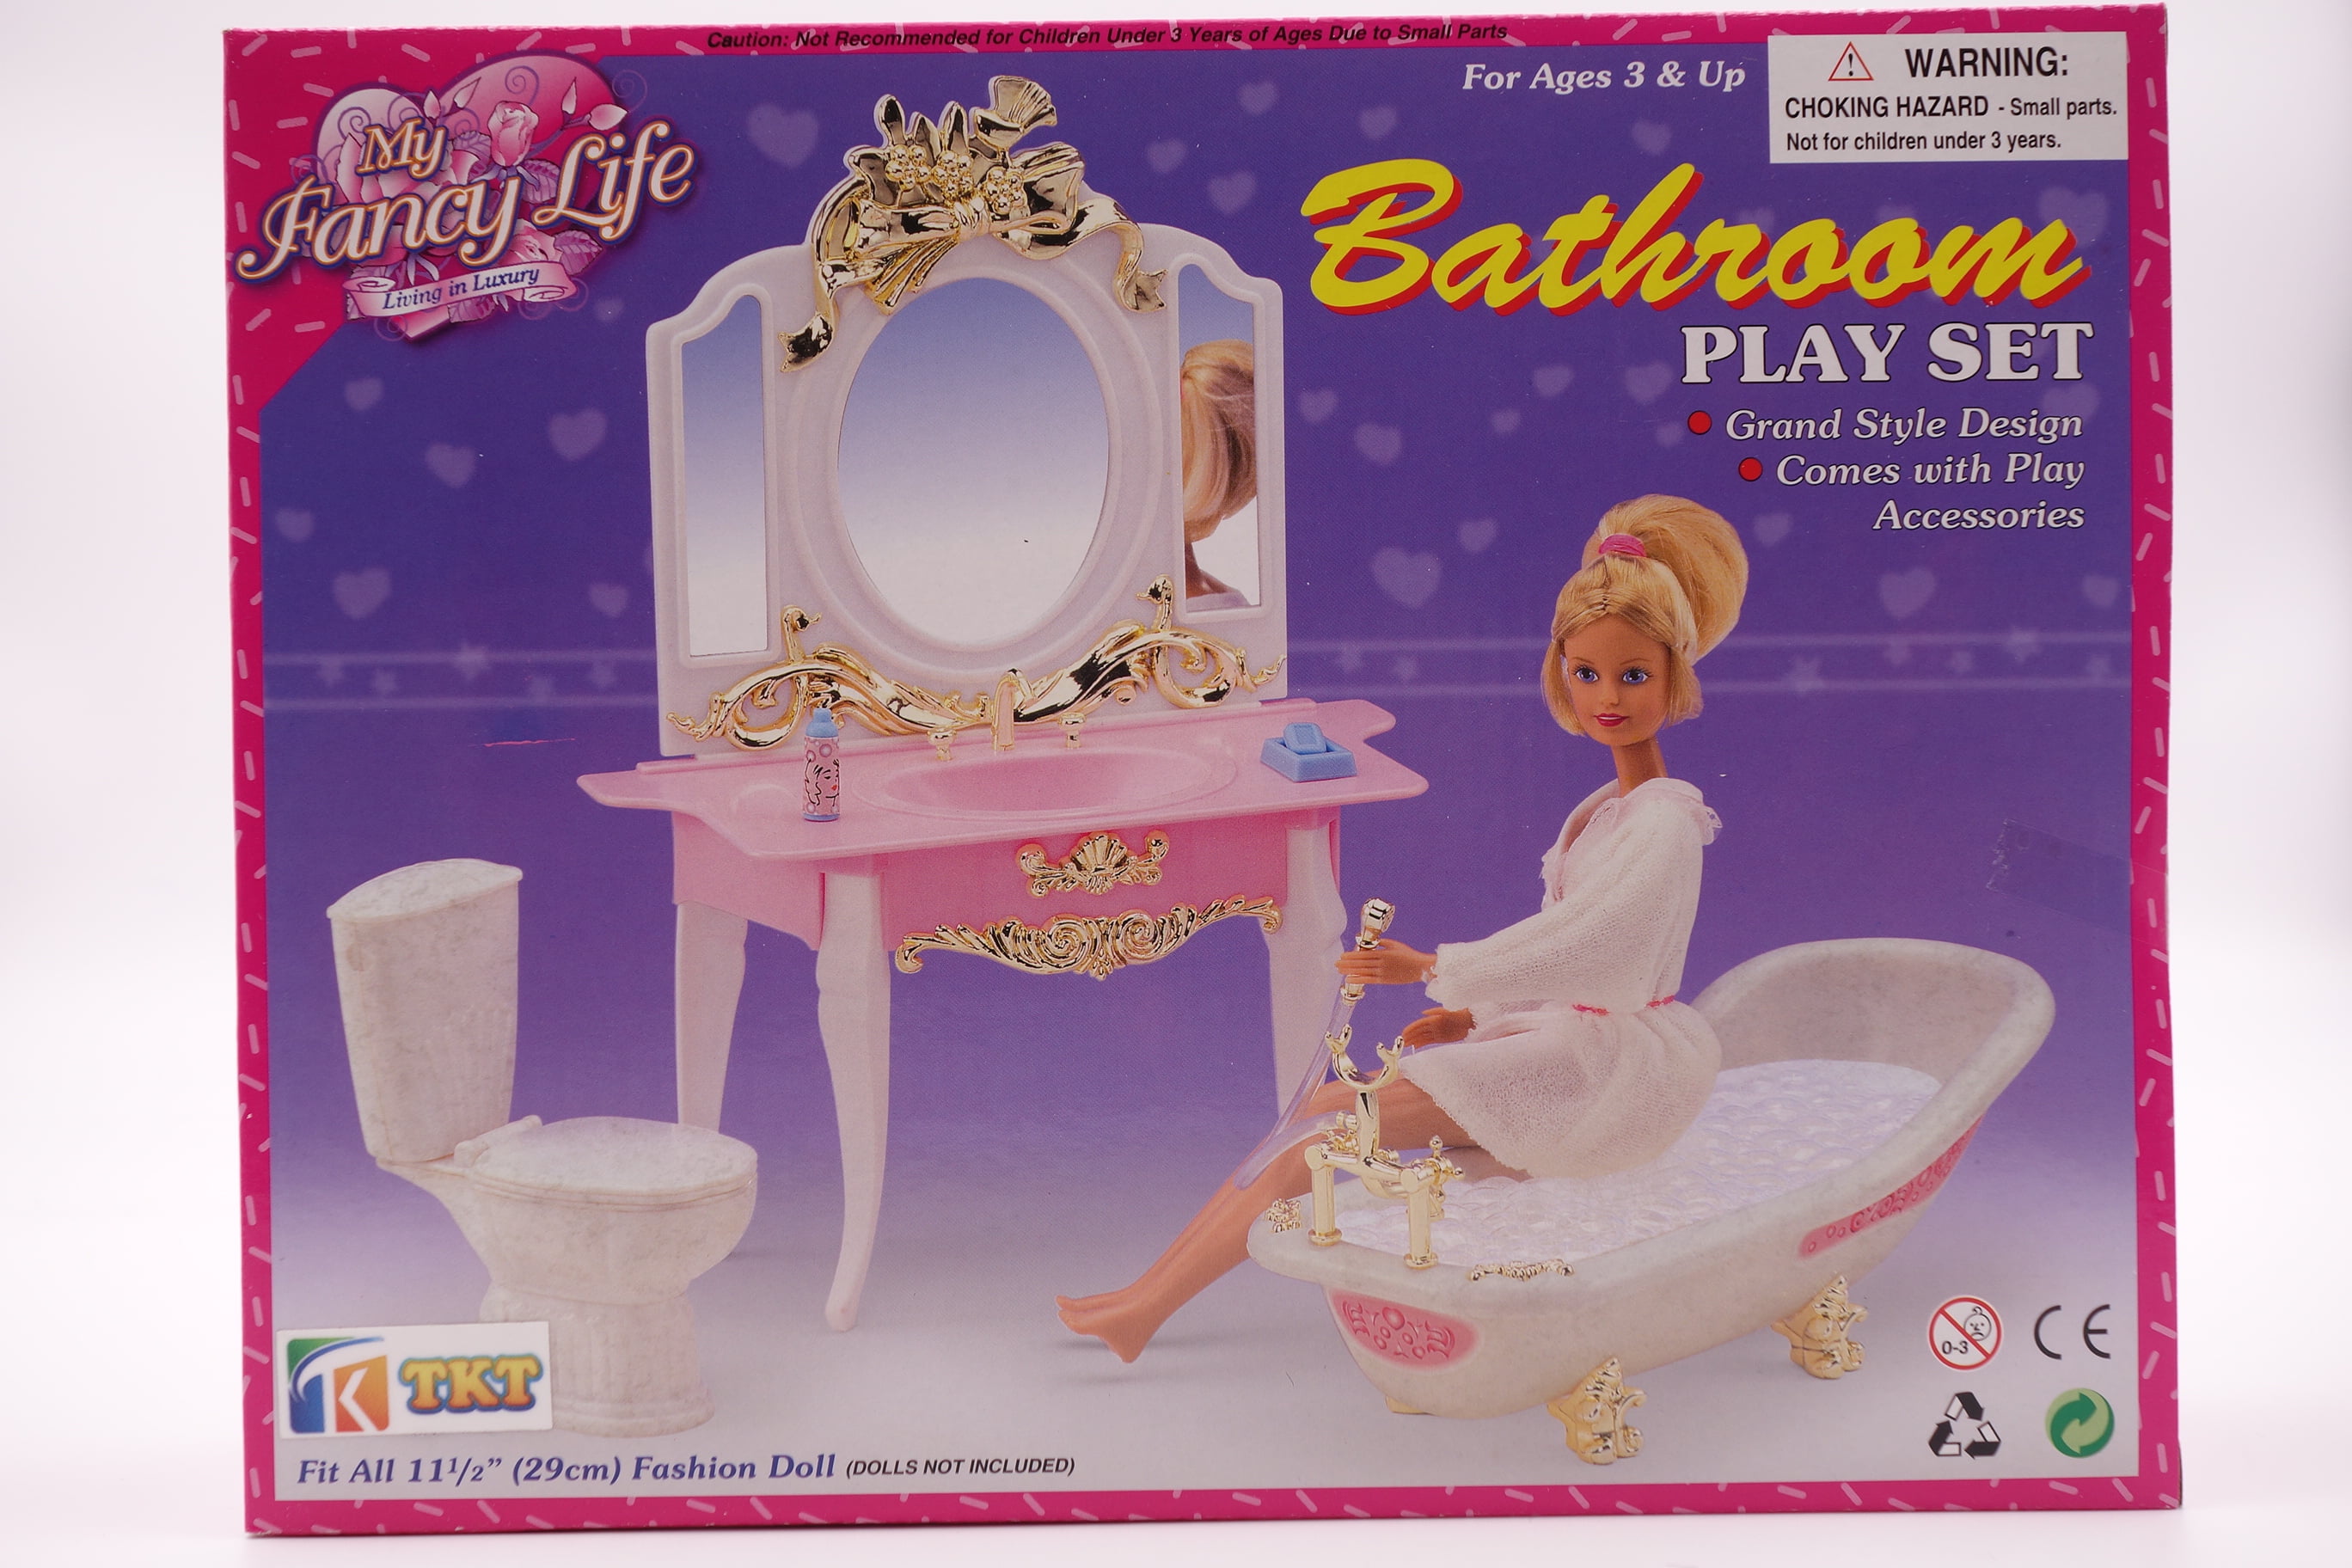 Bath/Toilet Play Set My Fancy Life Barbie Size Dollhouse Furniture Bathing Fun 